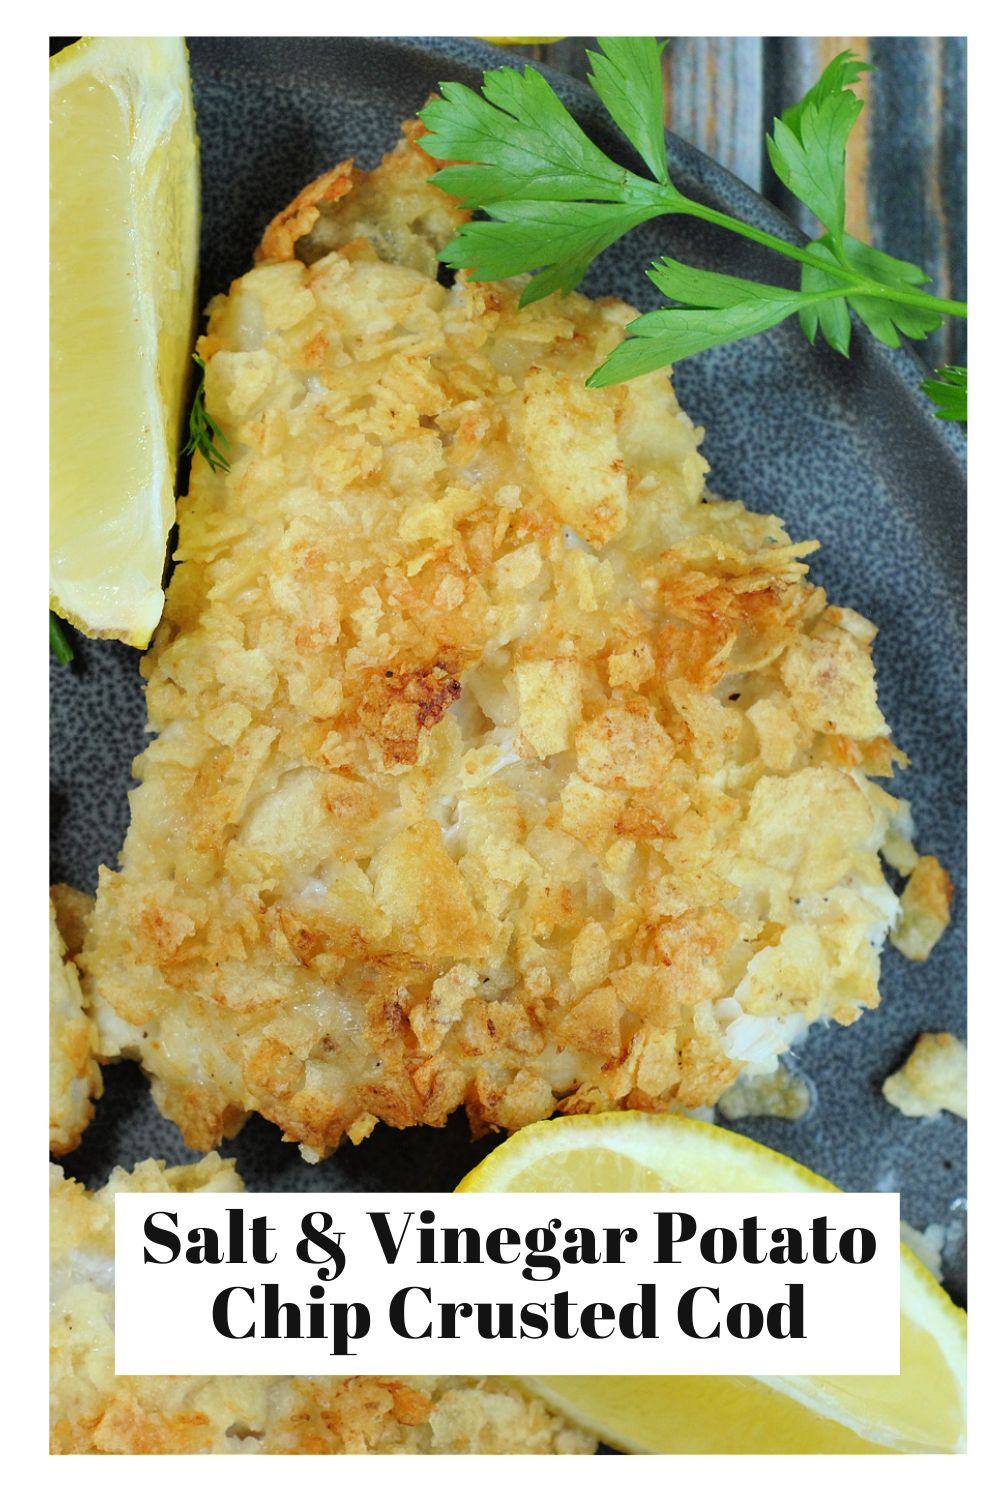 Salt and Vinegar Potato Chip Crusted Cod via @preventionrd